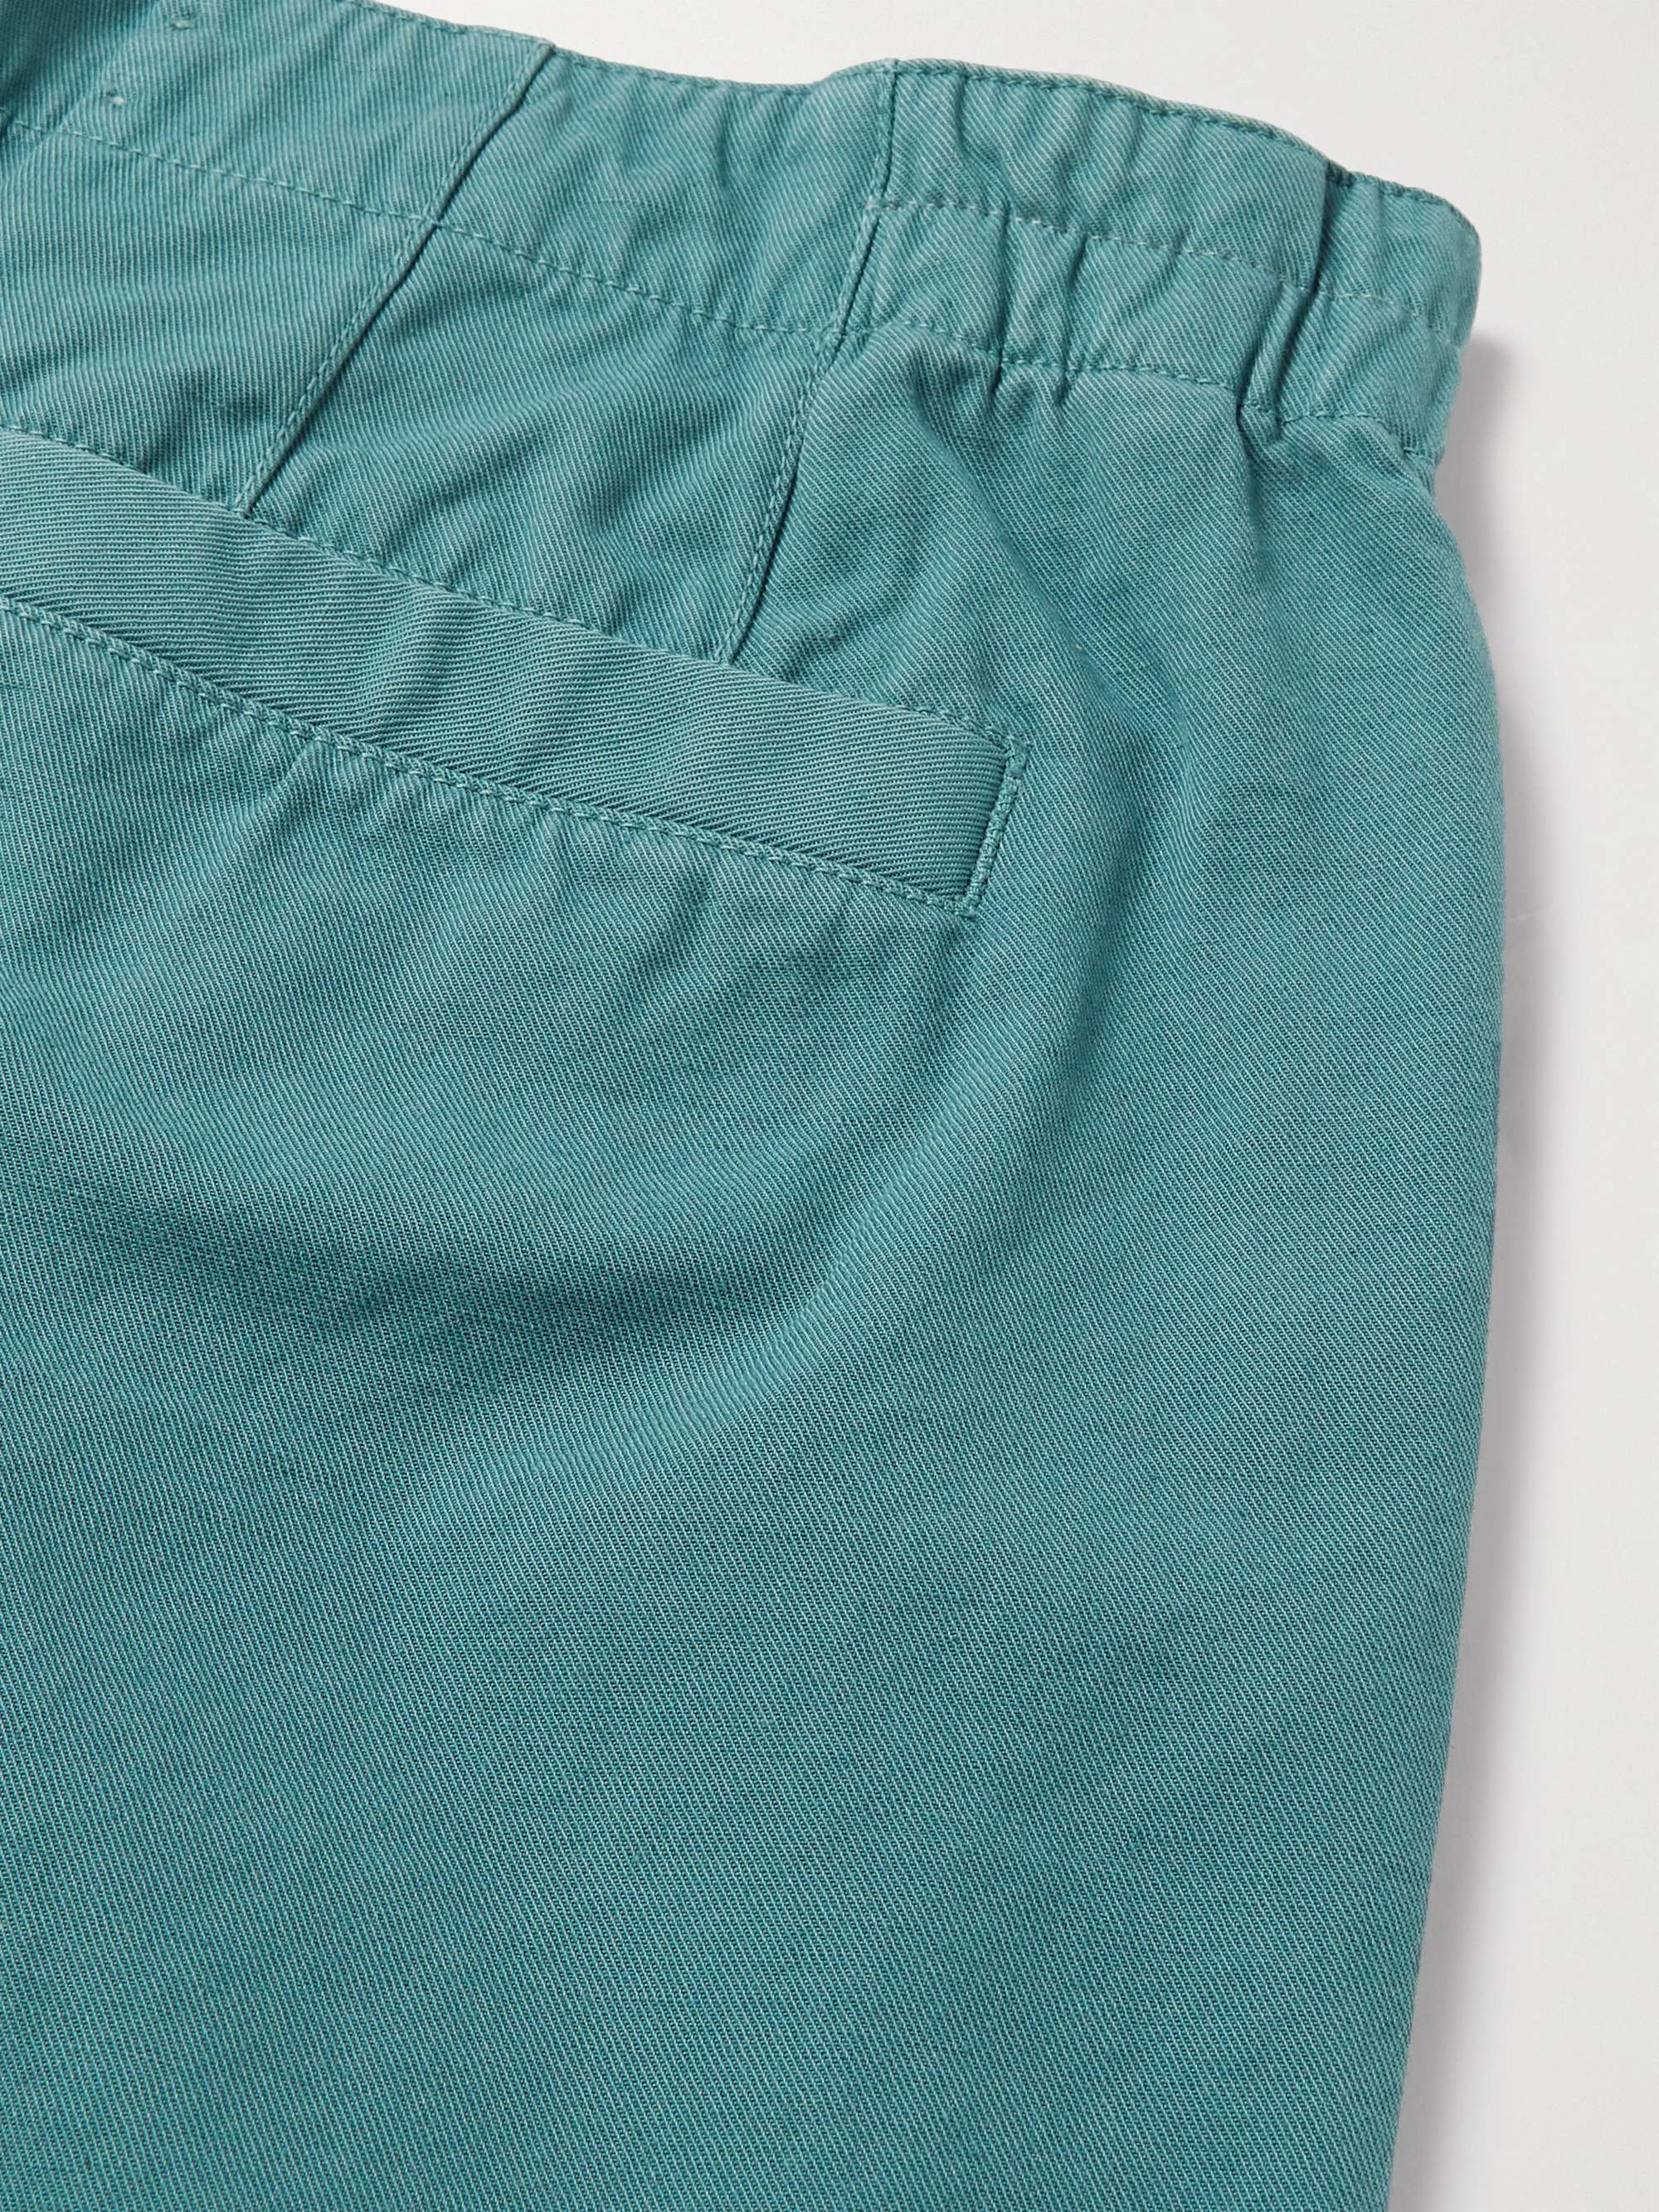 ORLEBAR BROWN Canton Cotton-Blend Shorts